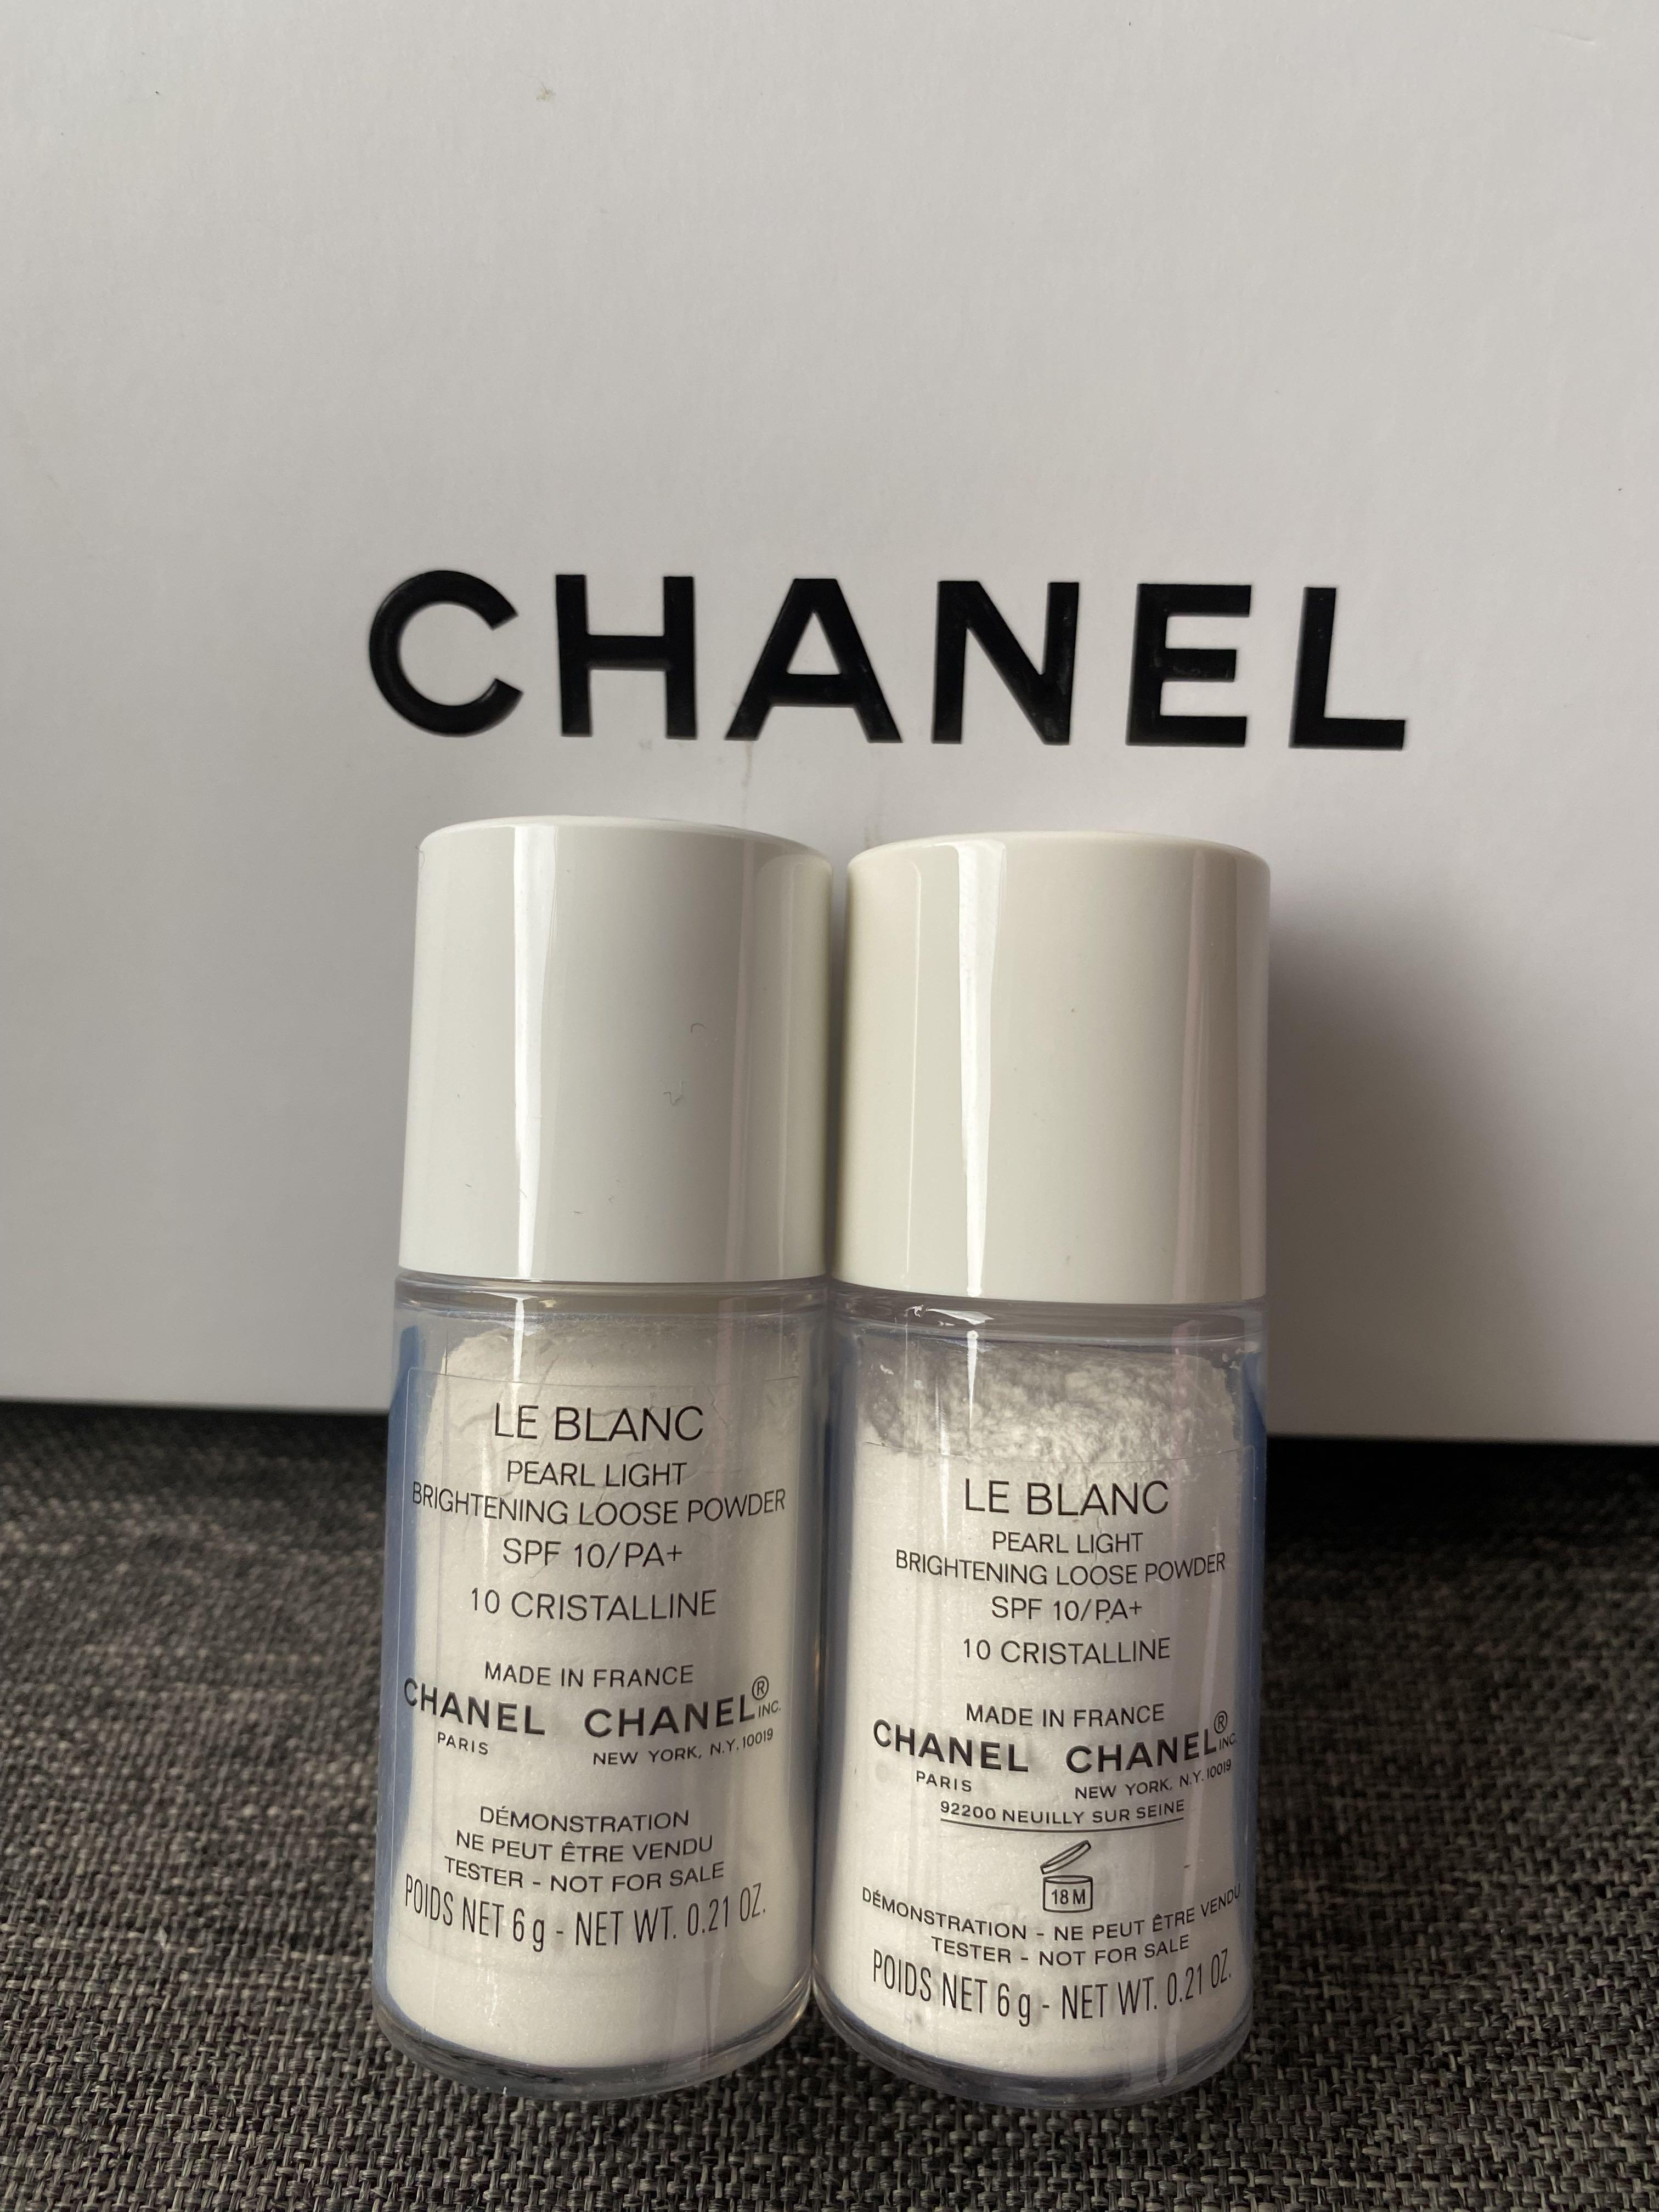 Chanel Le Blanc Pearl Light Brightening Loose Powder In 10 Cristalline